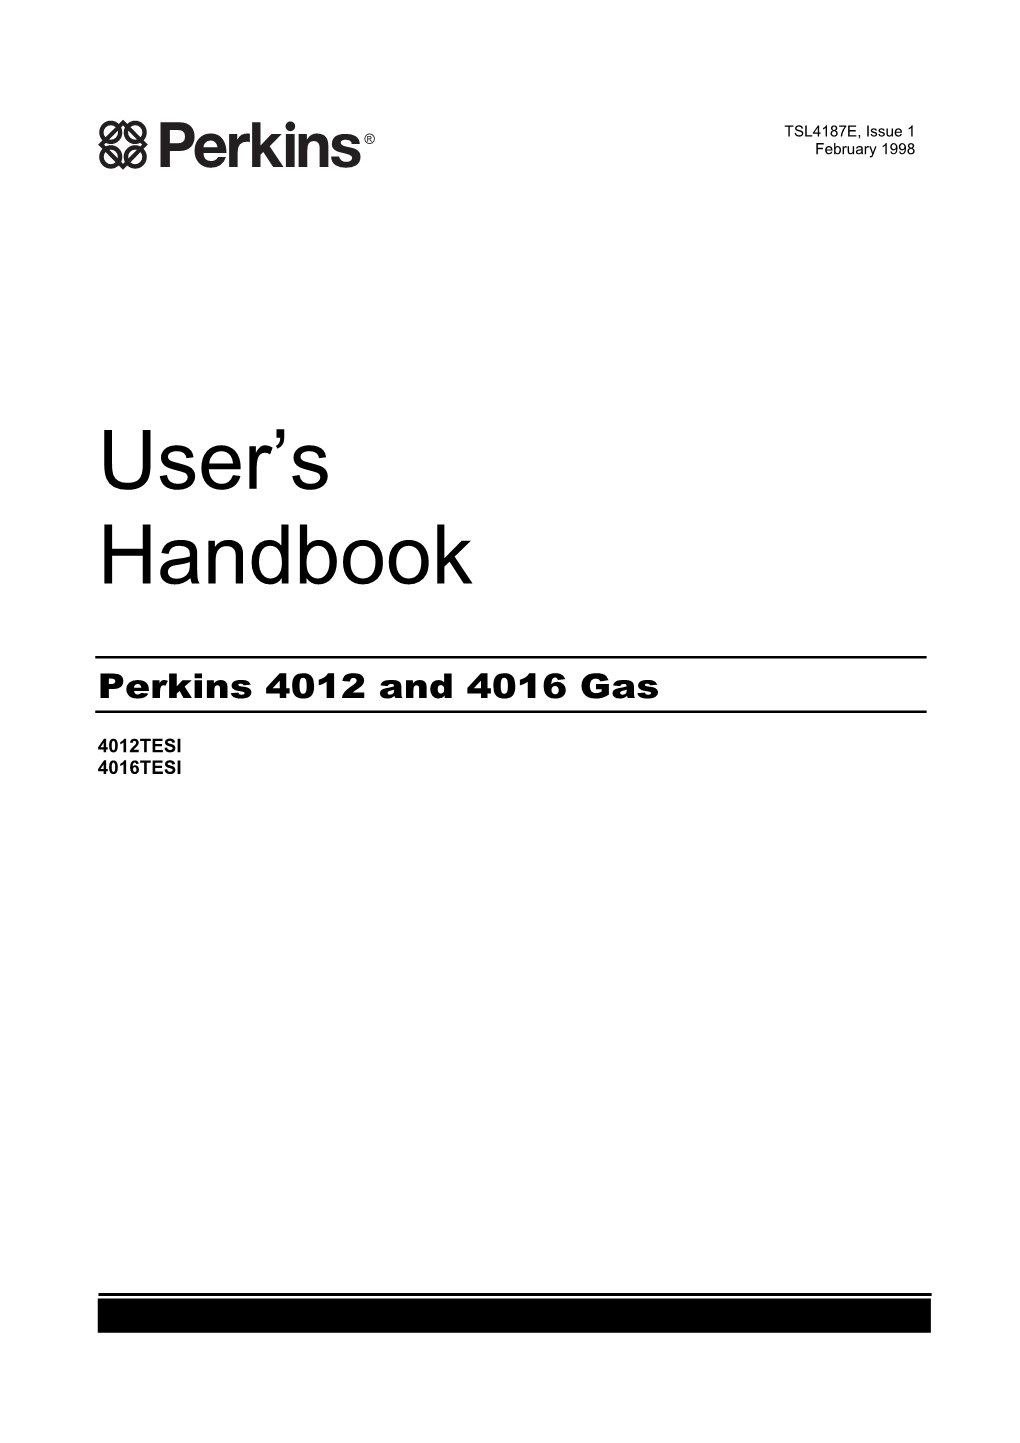 User's Handbook